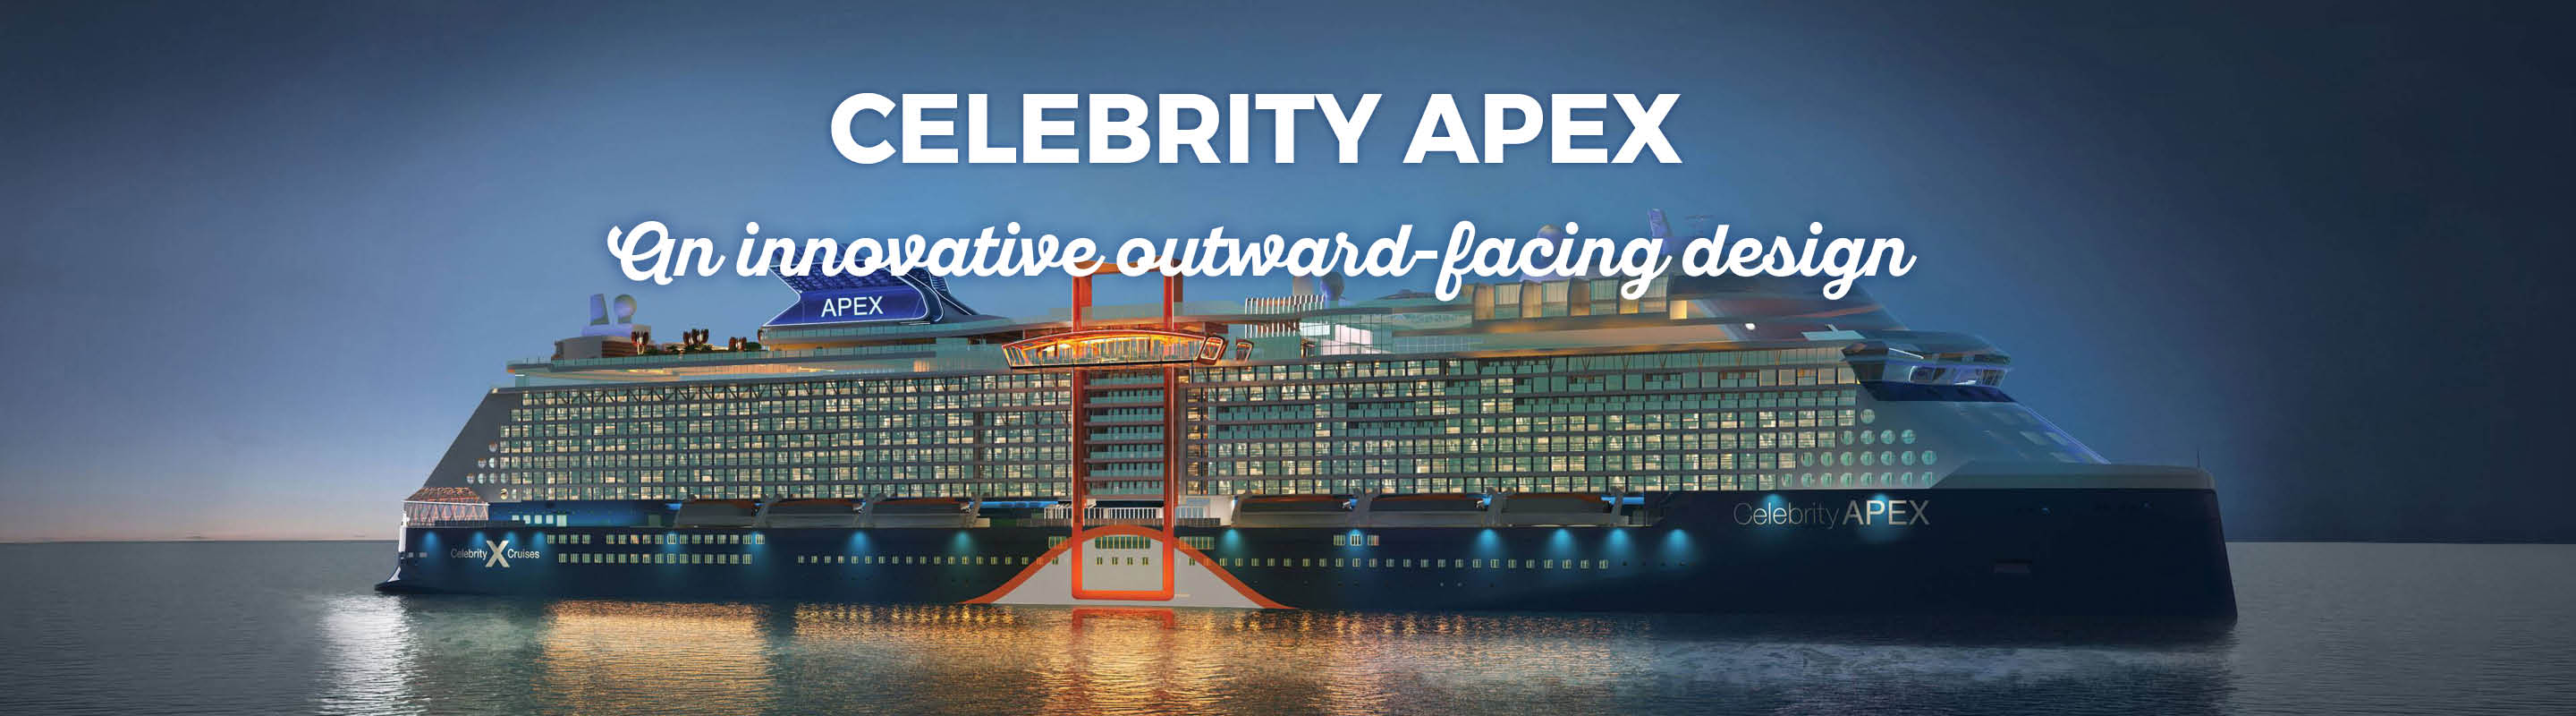 Celebrity Apex Cruise Deals Cheap Cruises Onboard Celebrity Apex